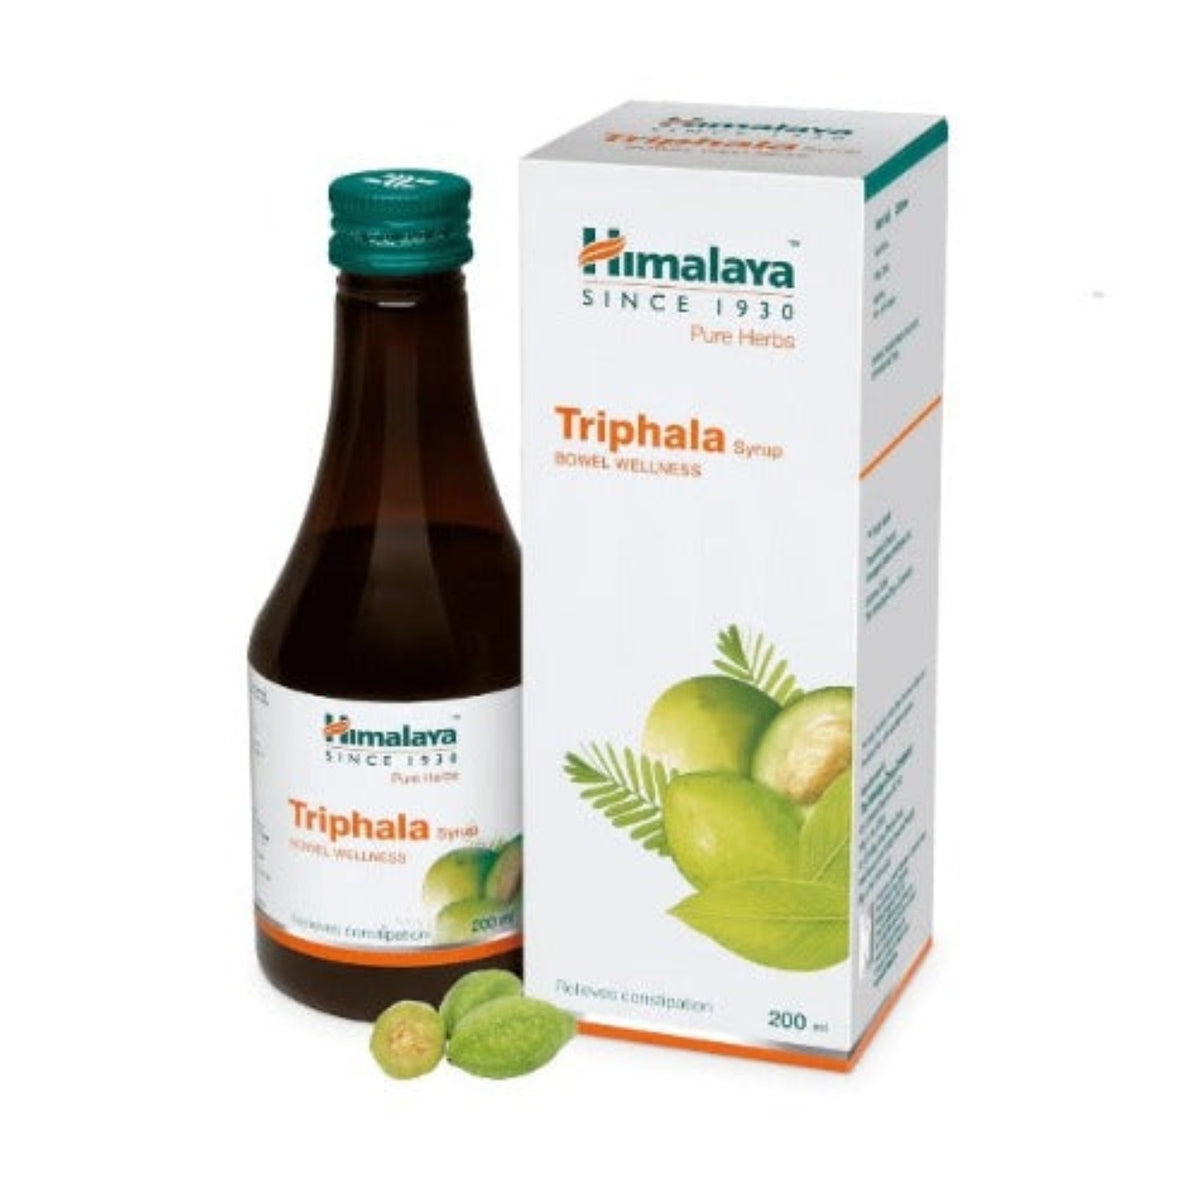 Himalaya Pure Herbs Bowel Wellness Herbal Ayurvedic Triphala Relieves Constipation Syrup 200 ml